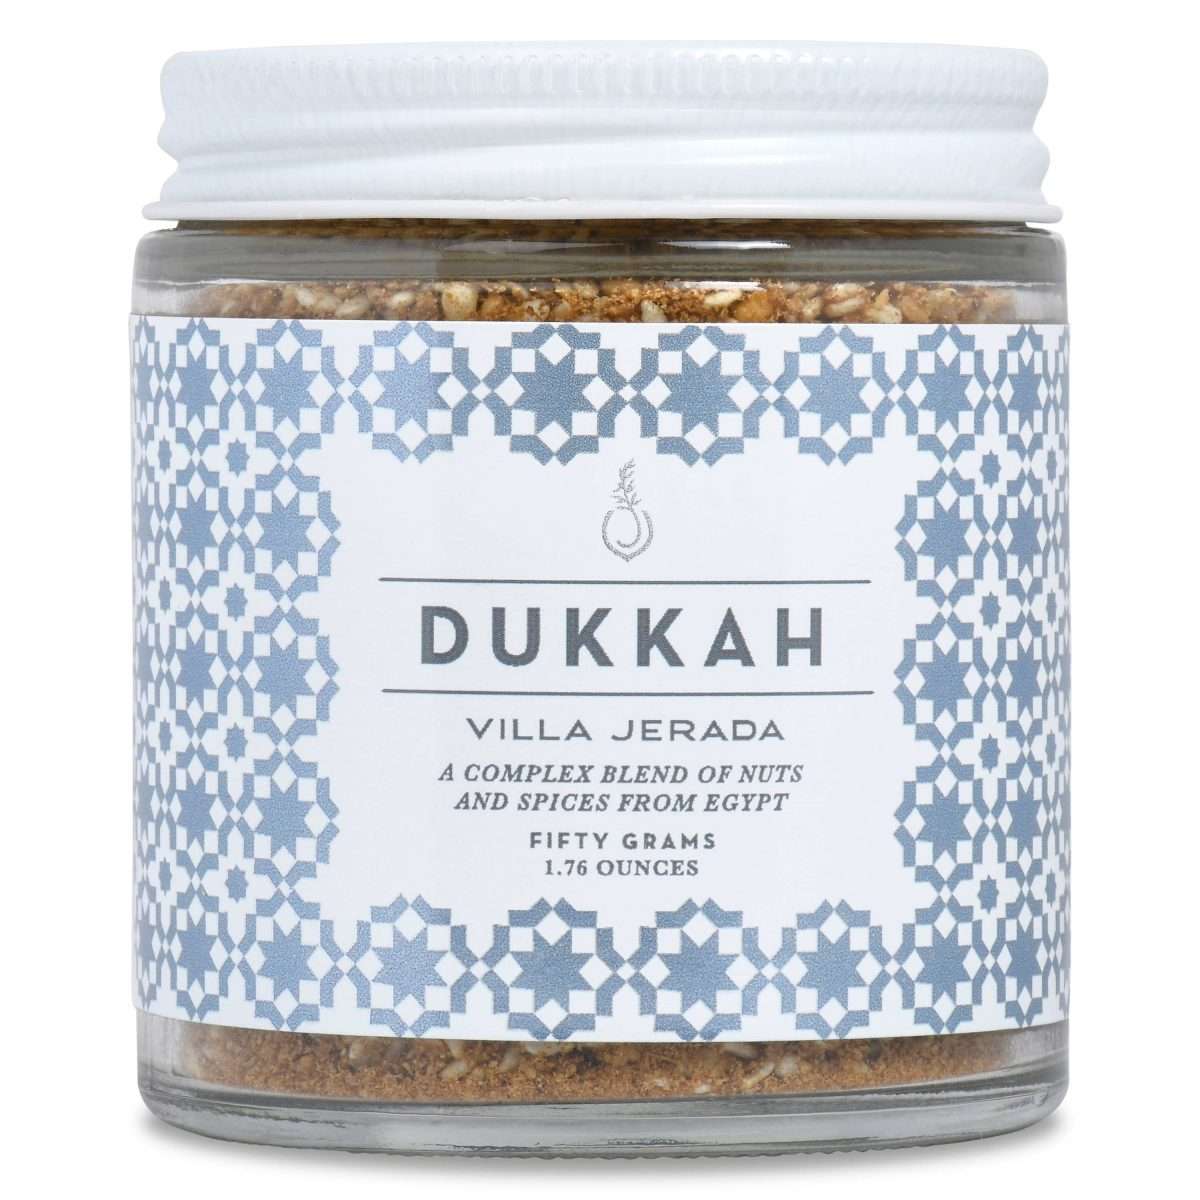 Villa Jerda Dukkah spice in a glass jar. 